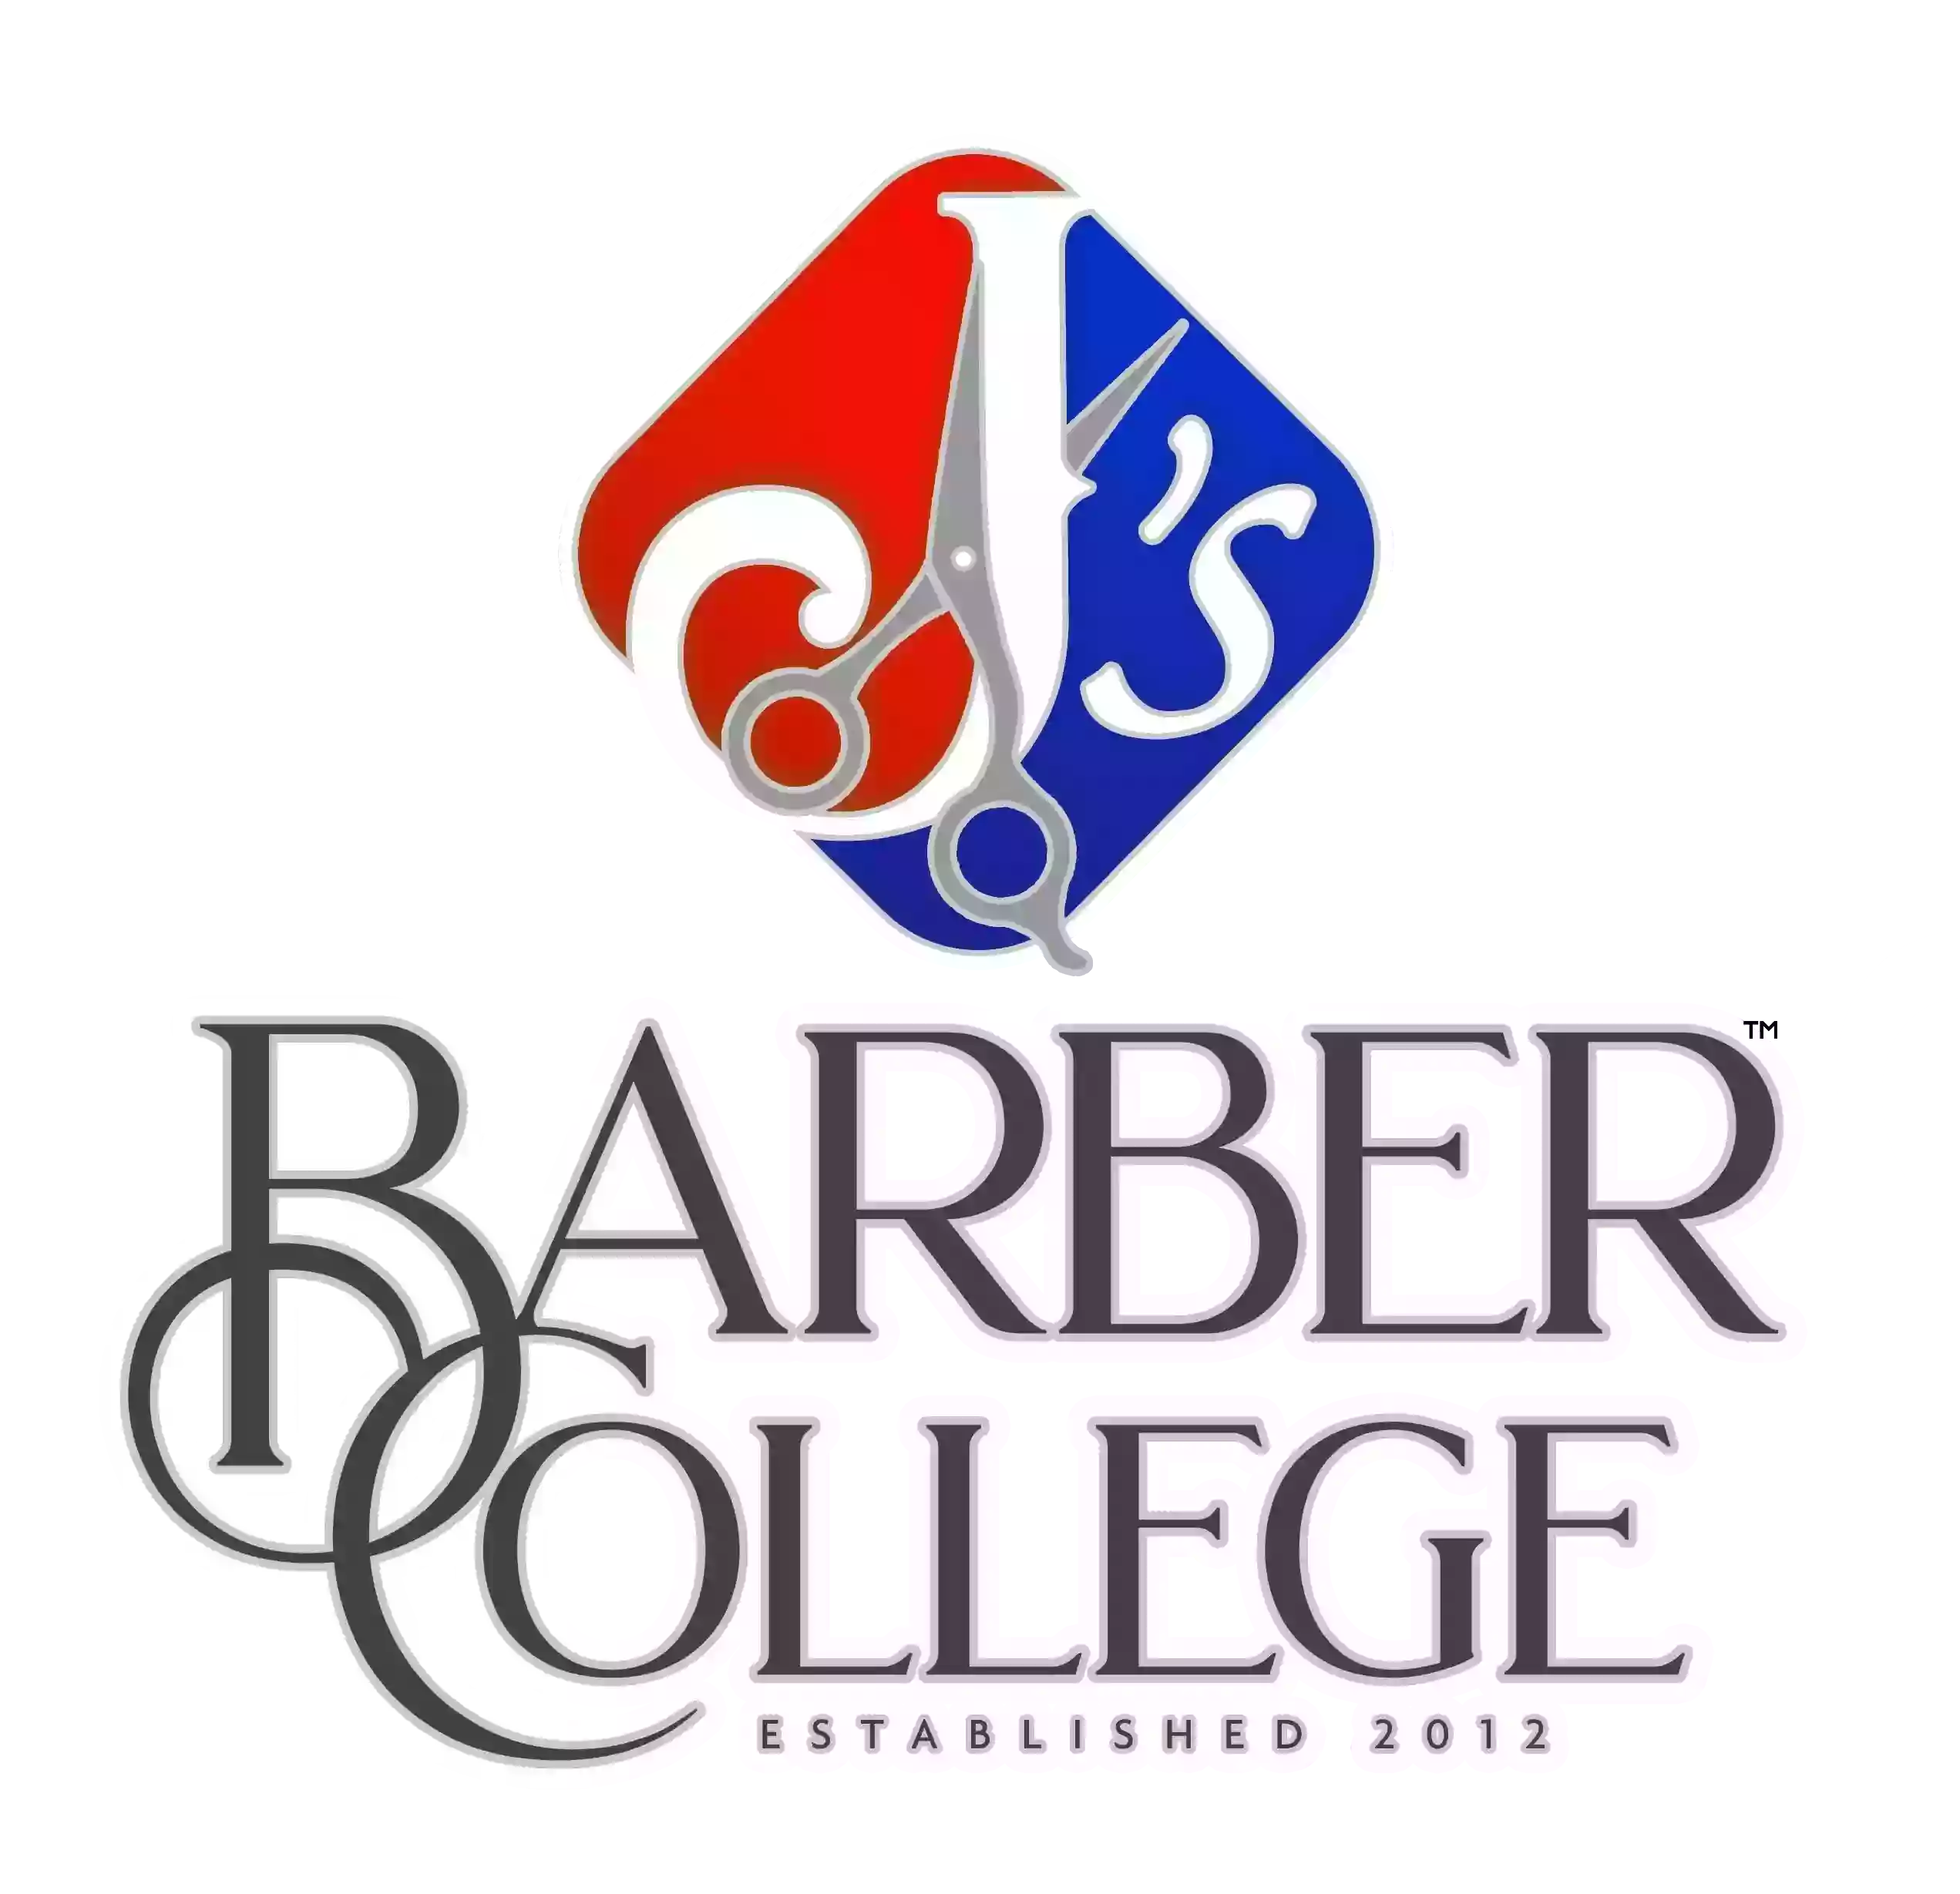 J's Barber College